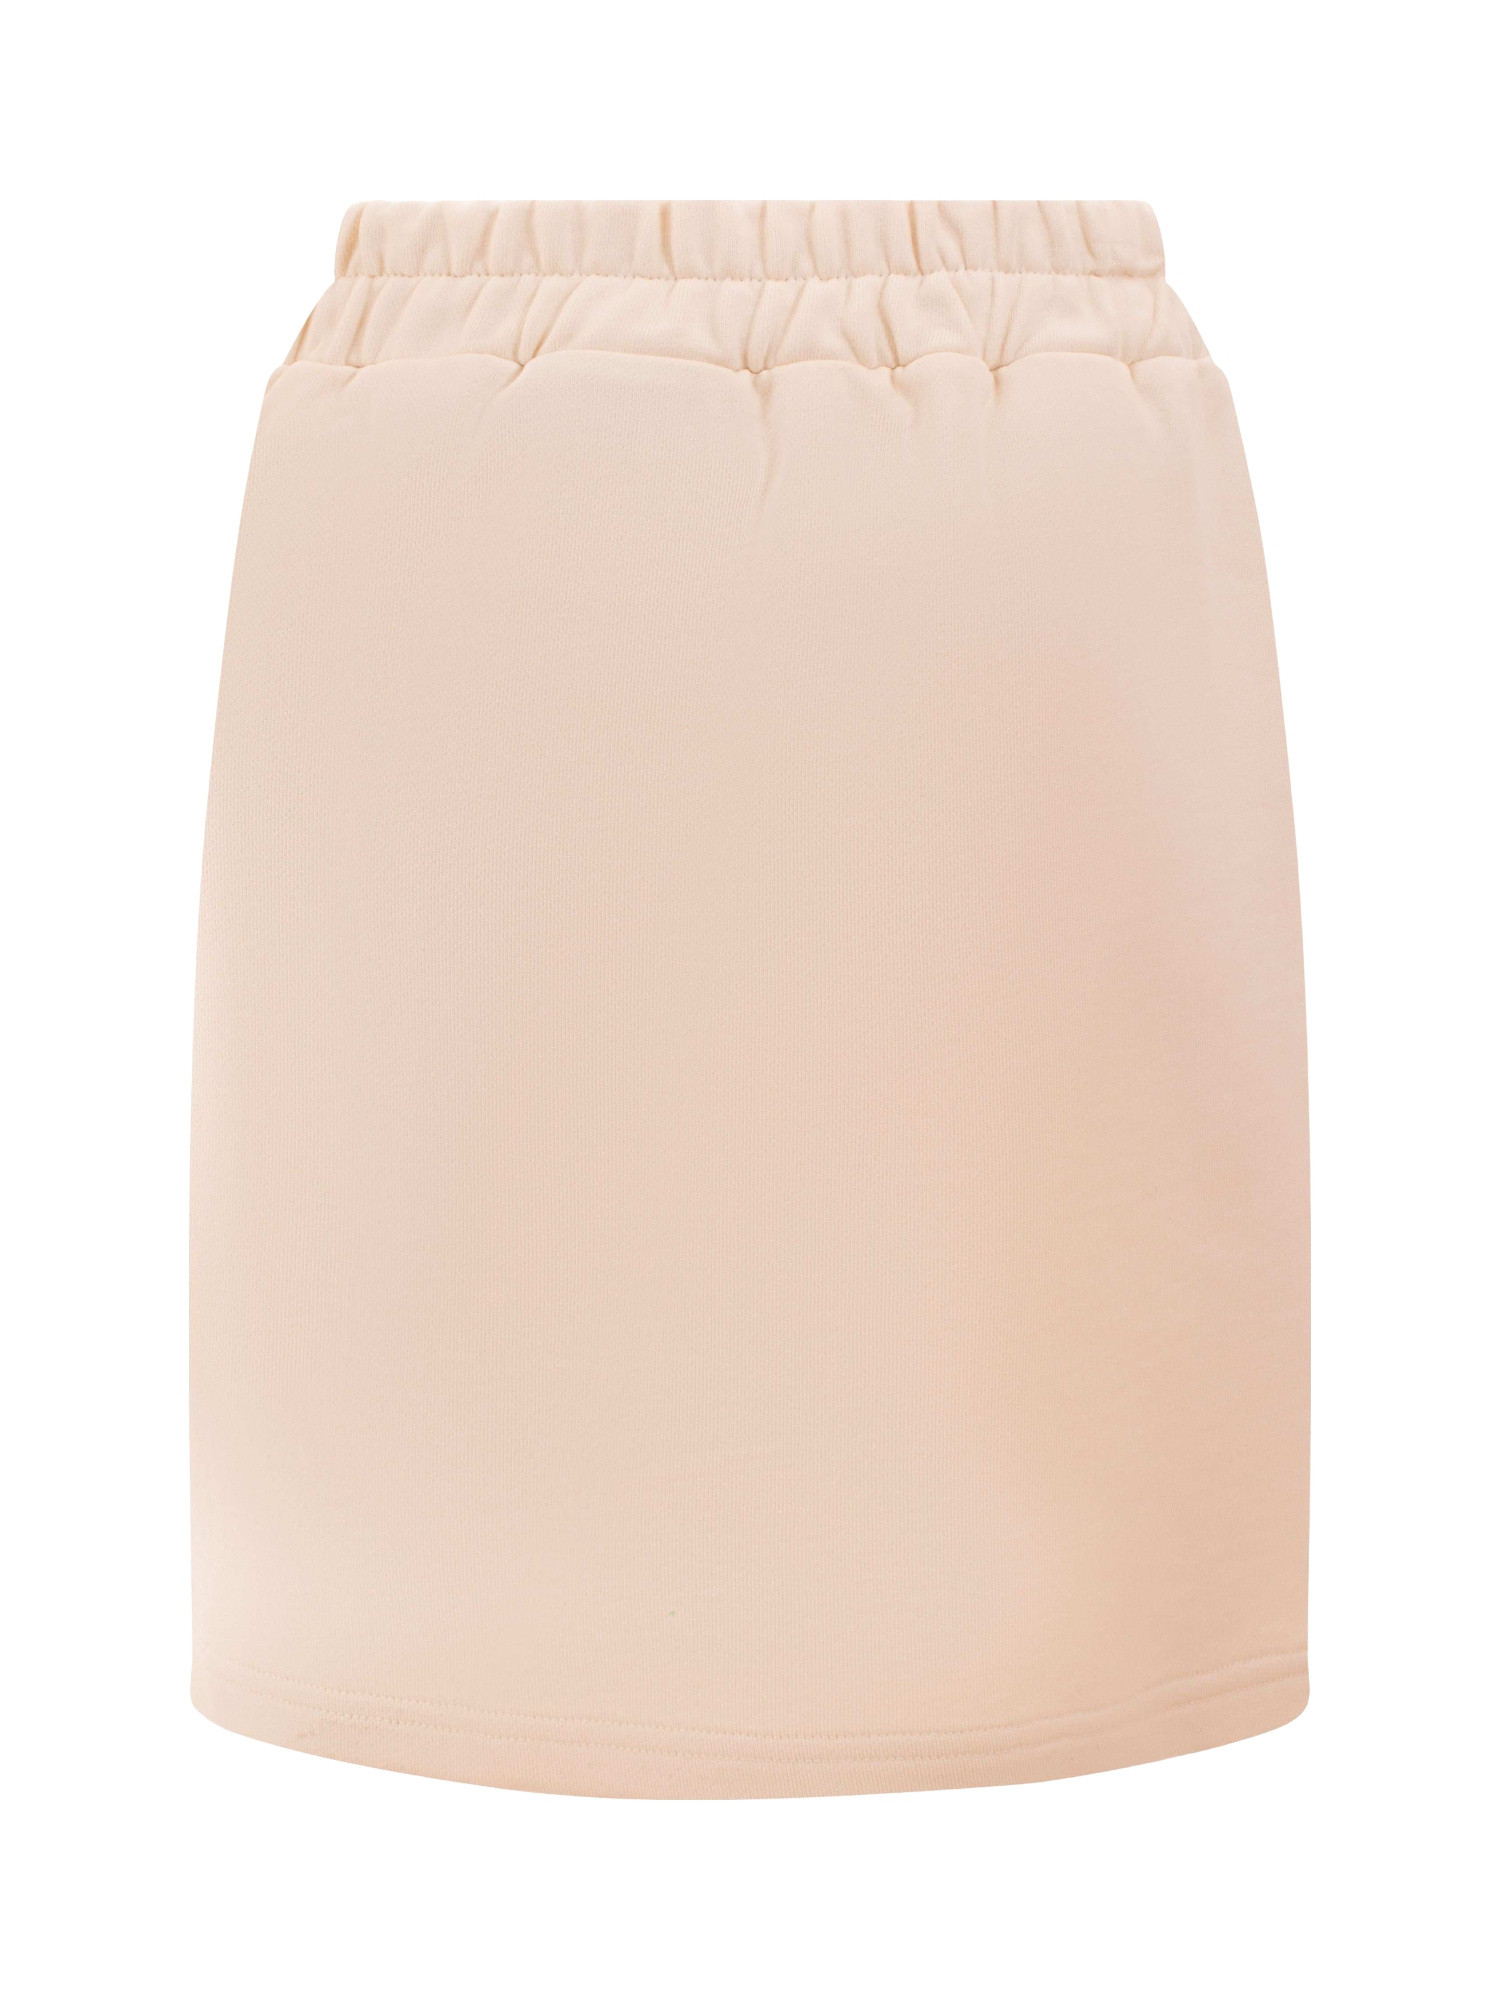 Chiara Ferragni - Eye Like skirt with elastic waist, White, large image number 1